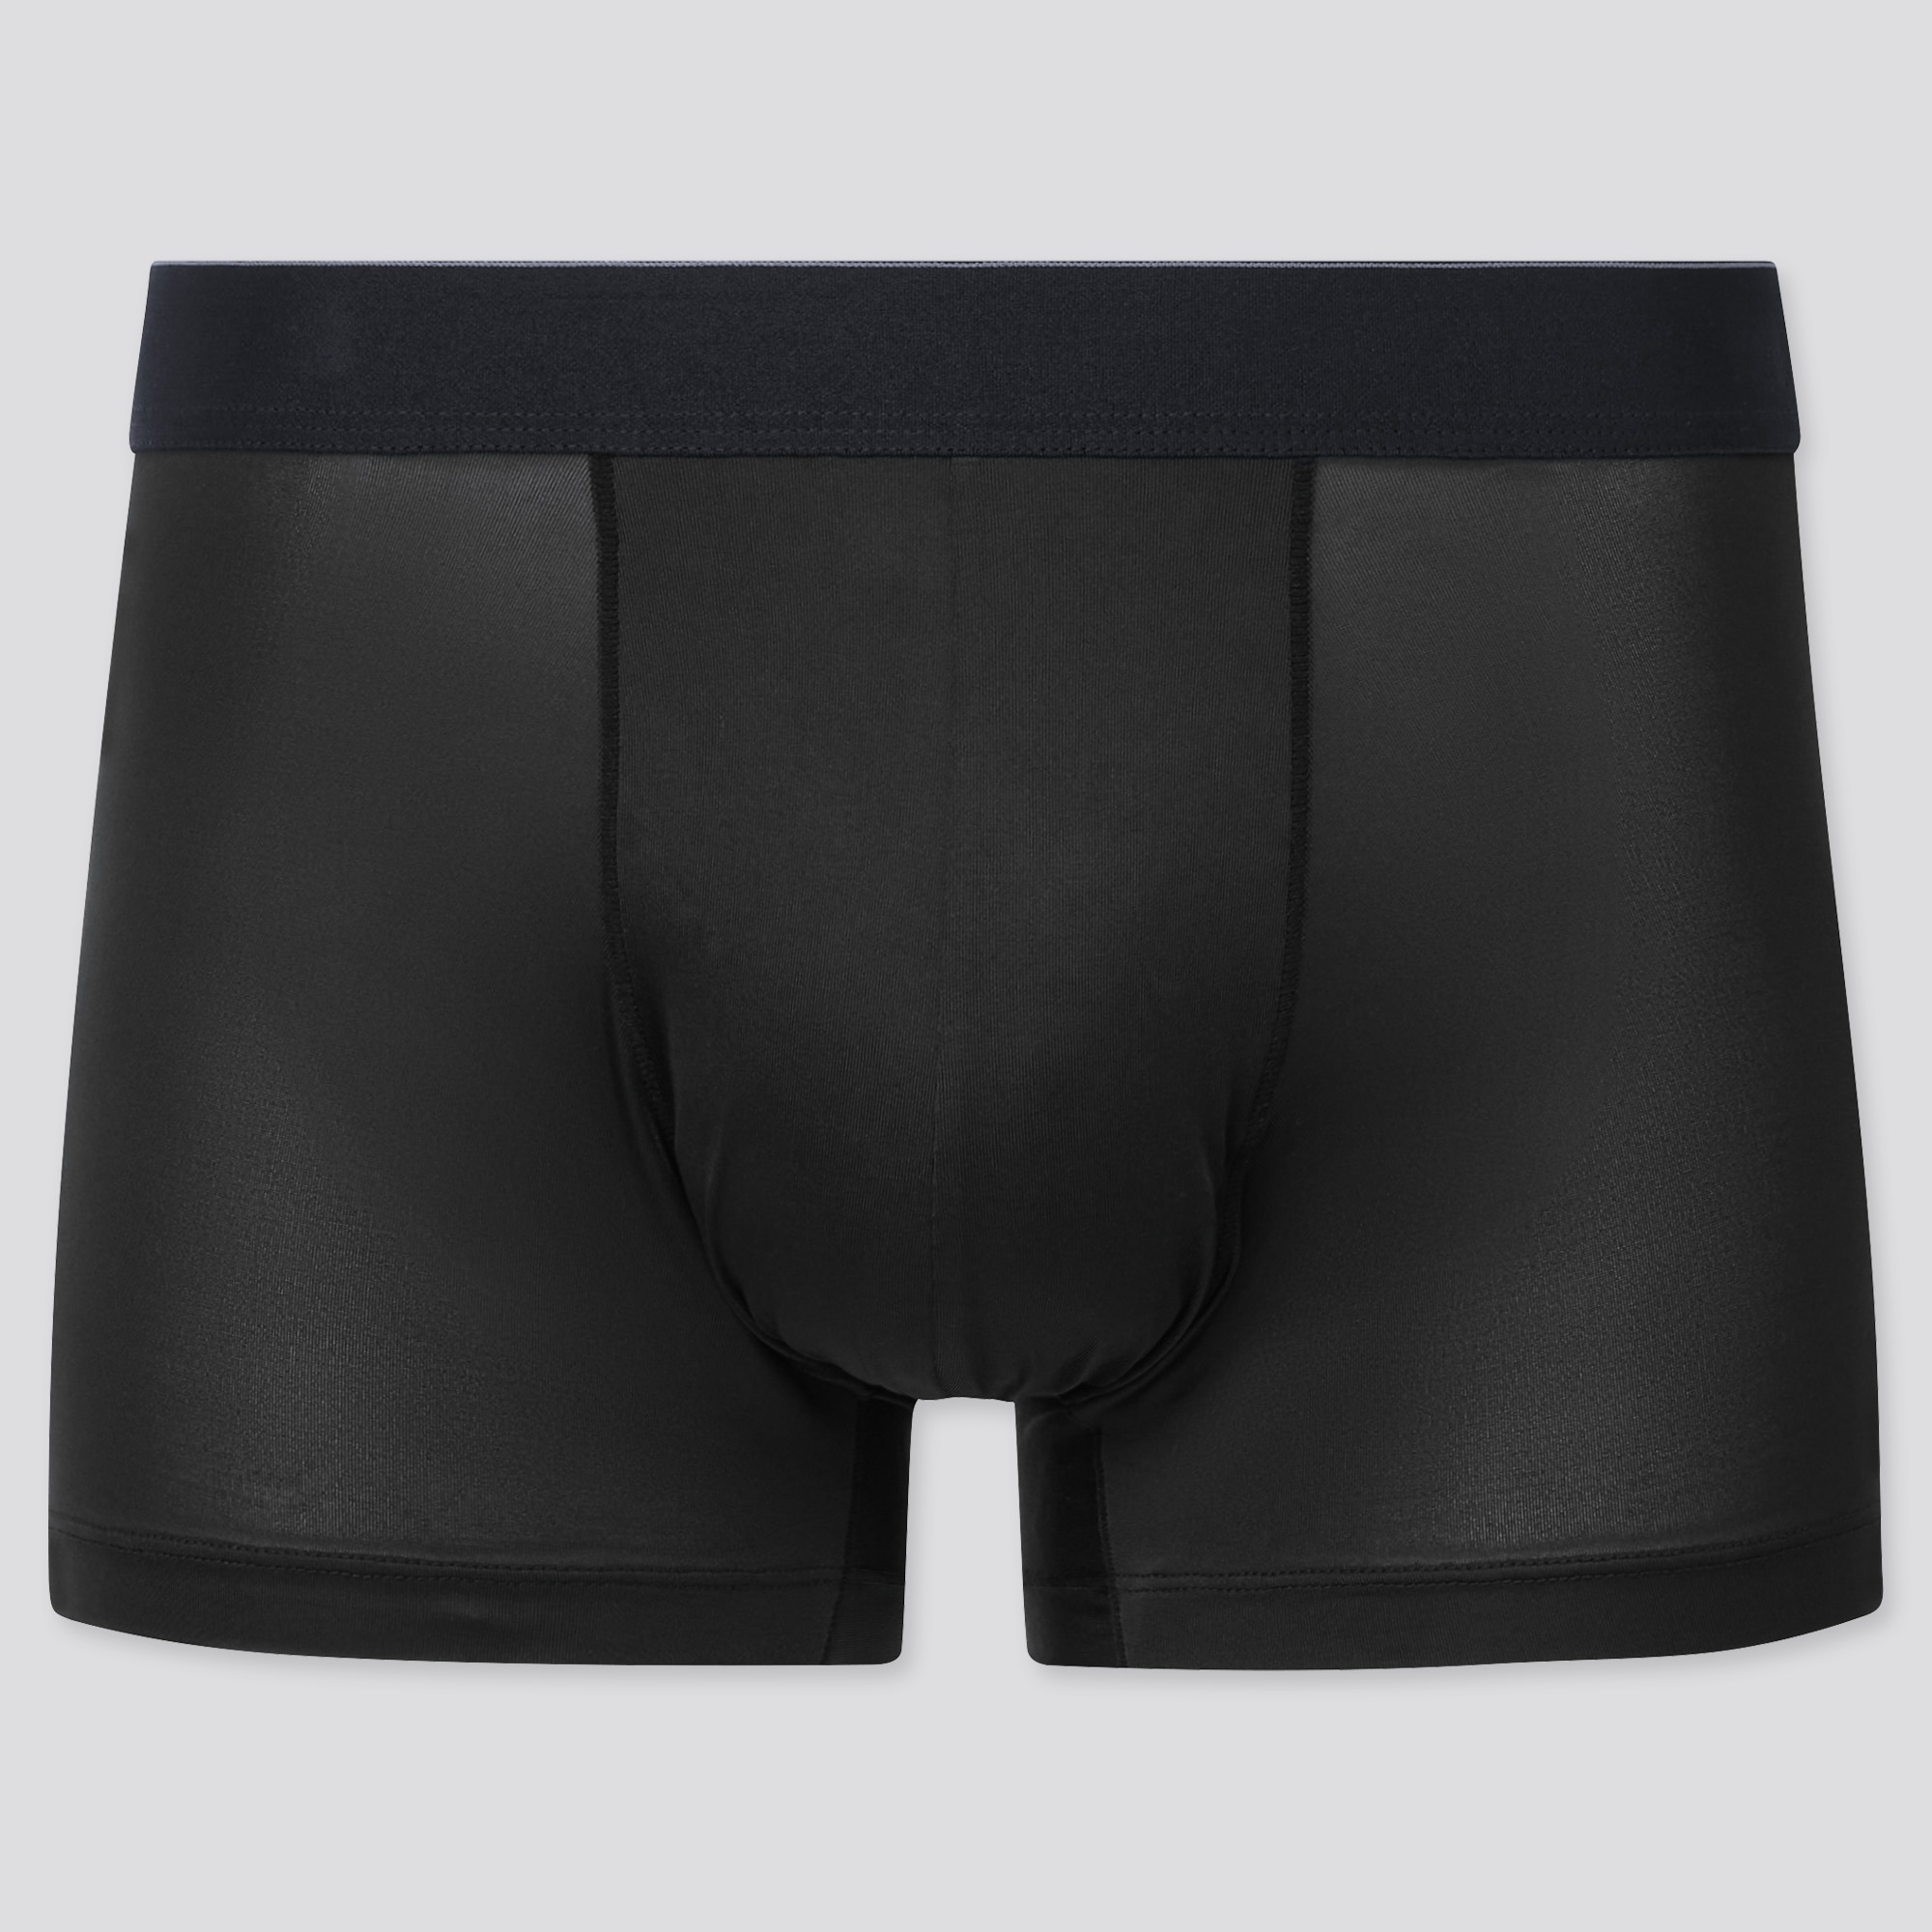 Uniqlo AIRism Boxer Briefs (Small, Black) at  Men's Clothing